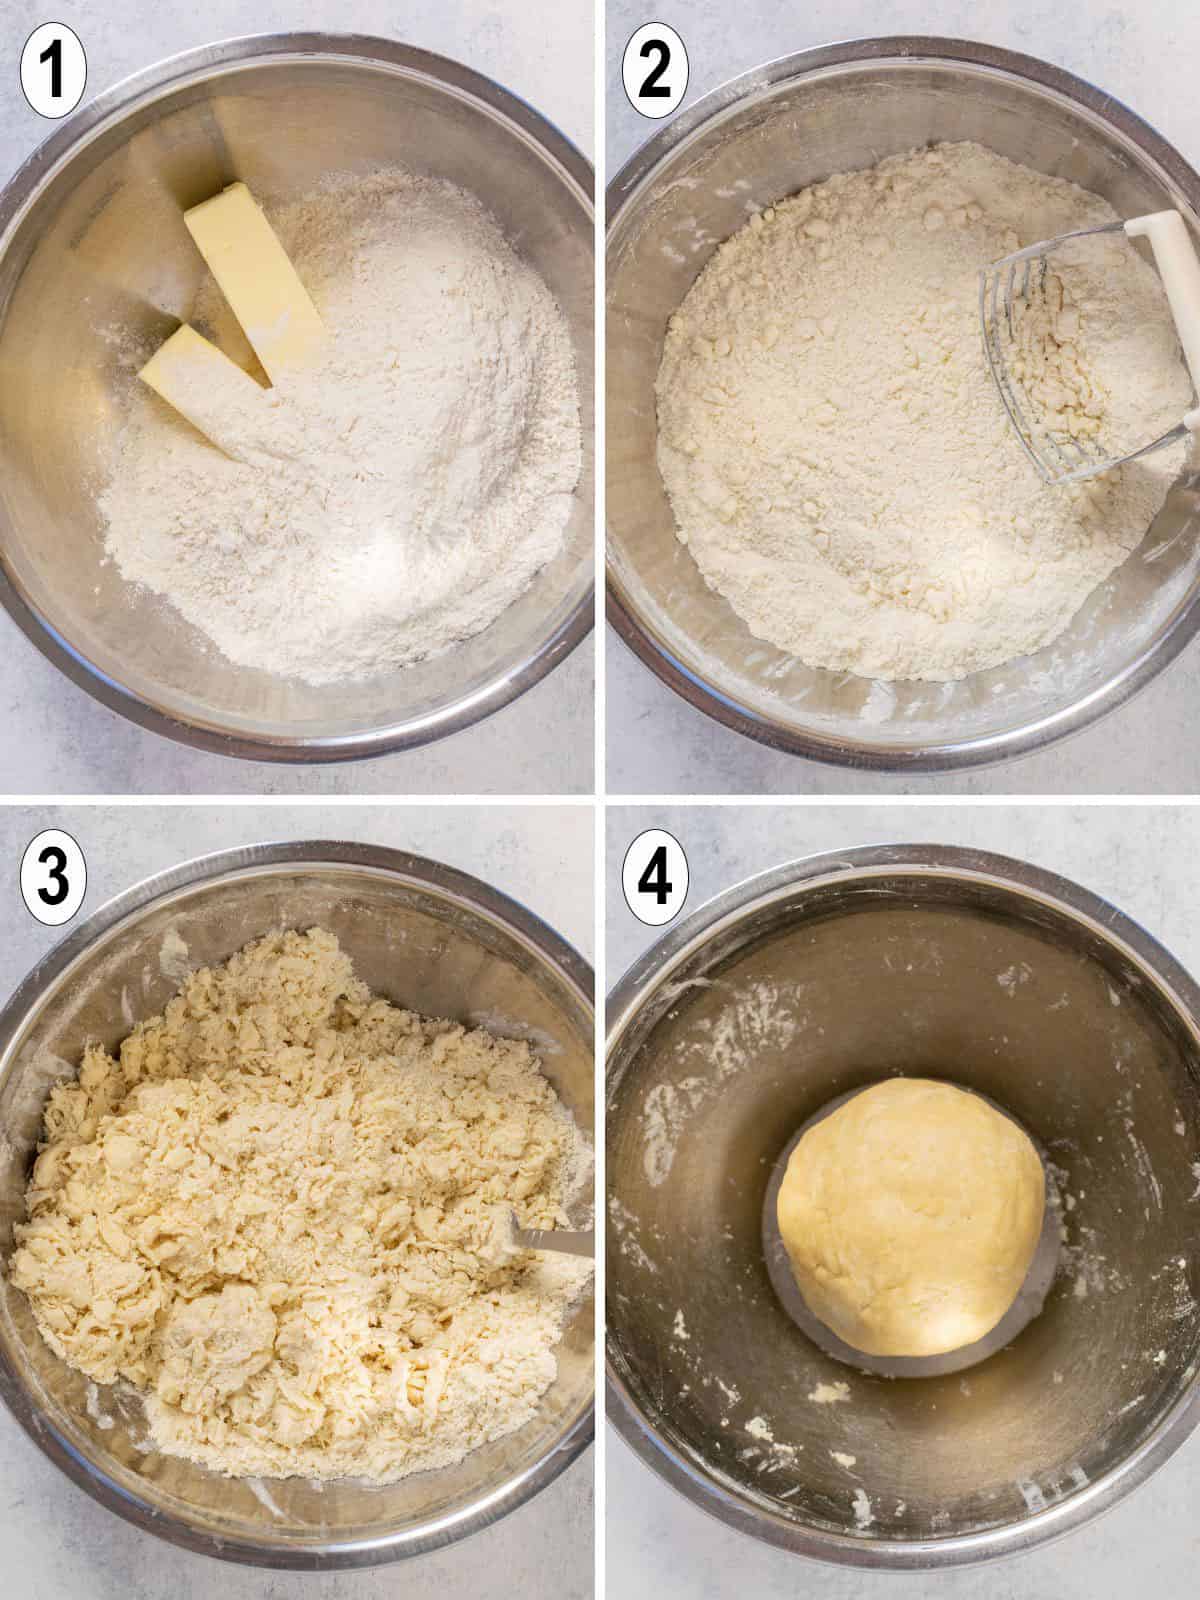 combine butter, flour, and liquids. form into dough ball